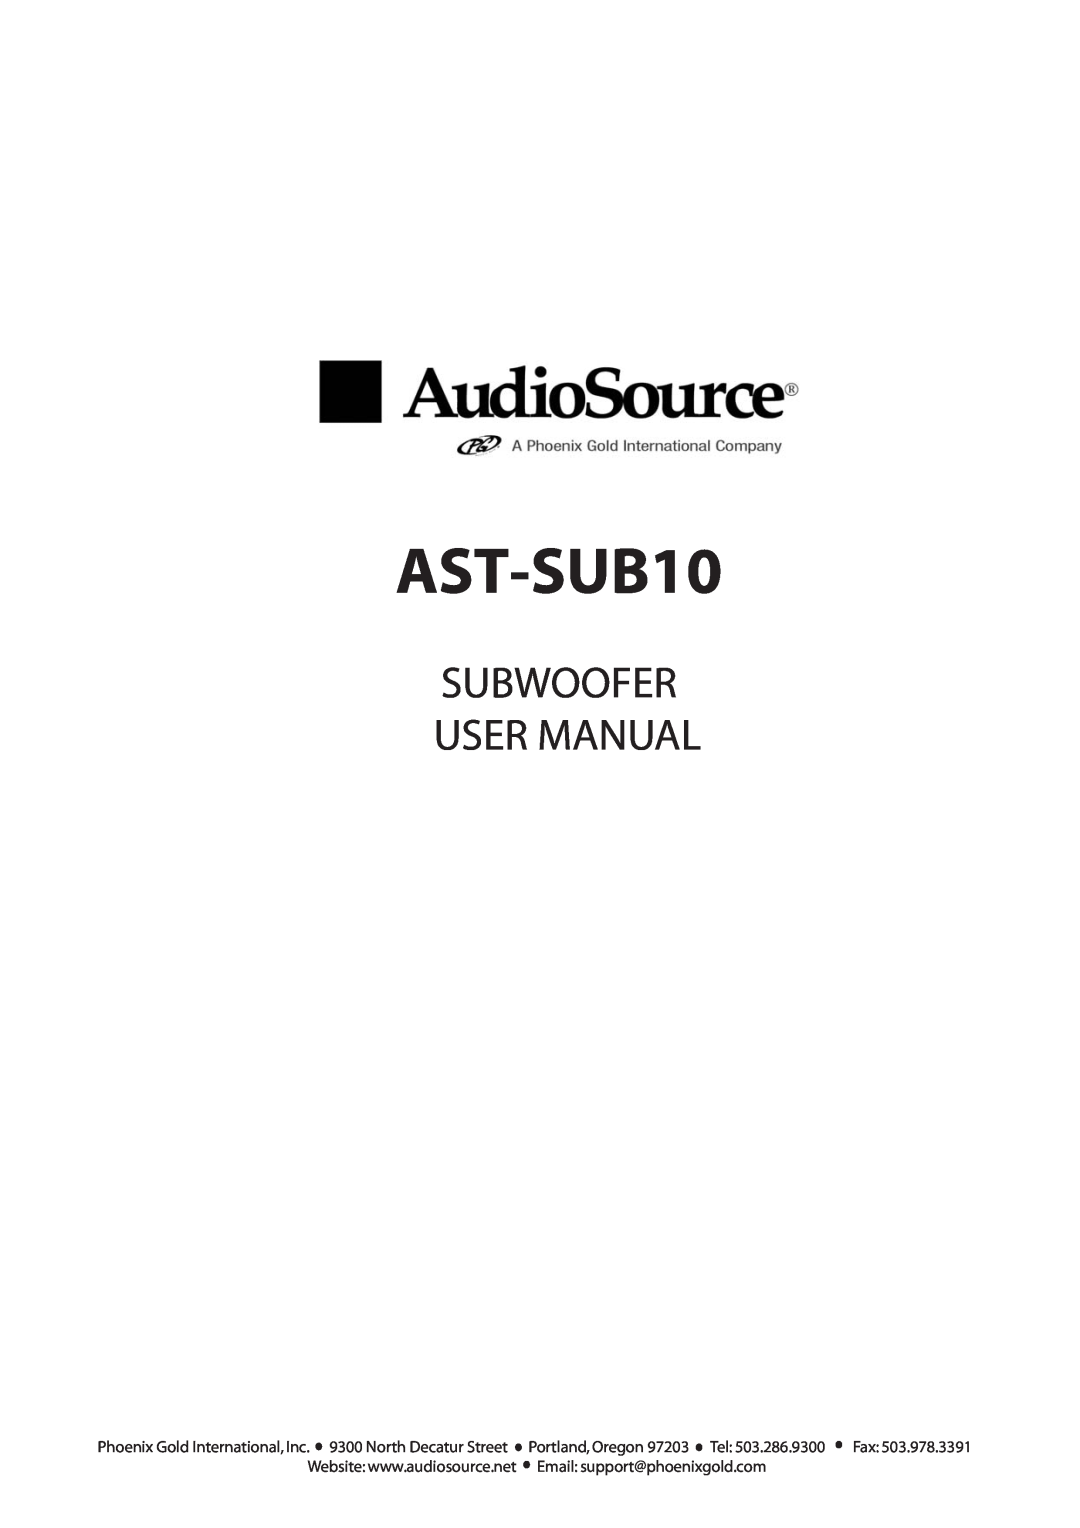 AudioSource AST-SUB10, SUBWOOFER user manual Portland, Oregon 97203 Tel 